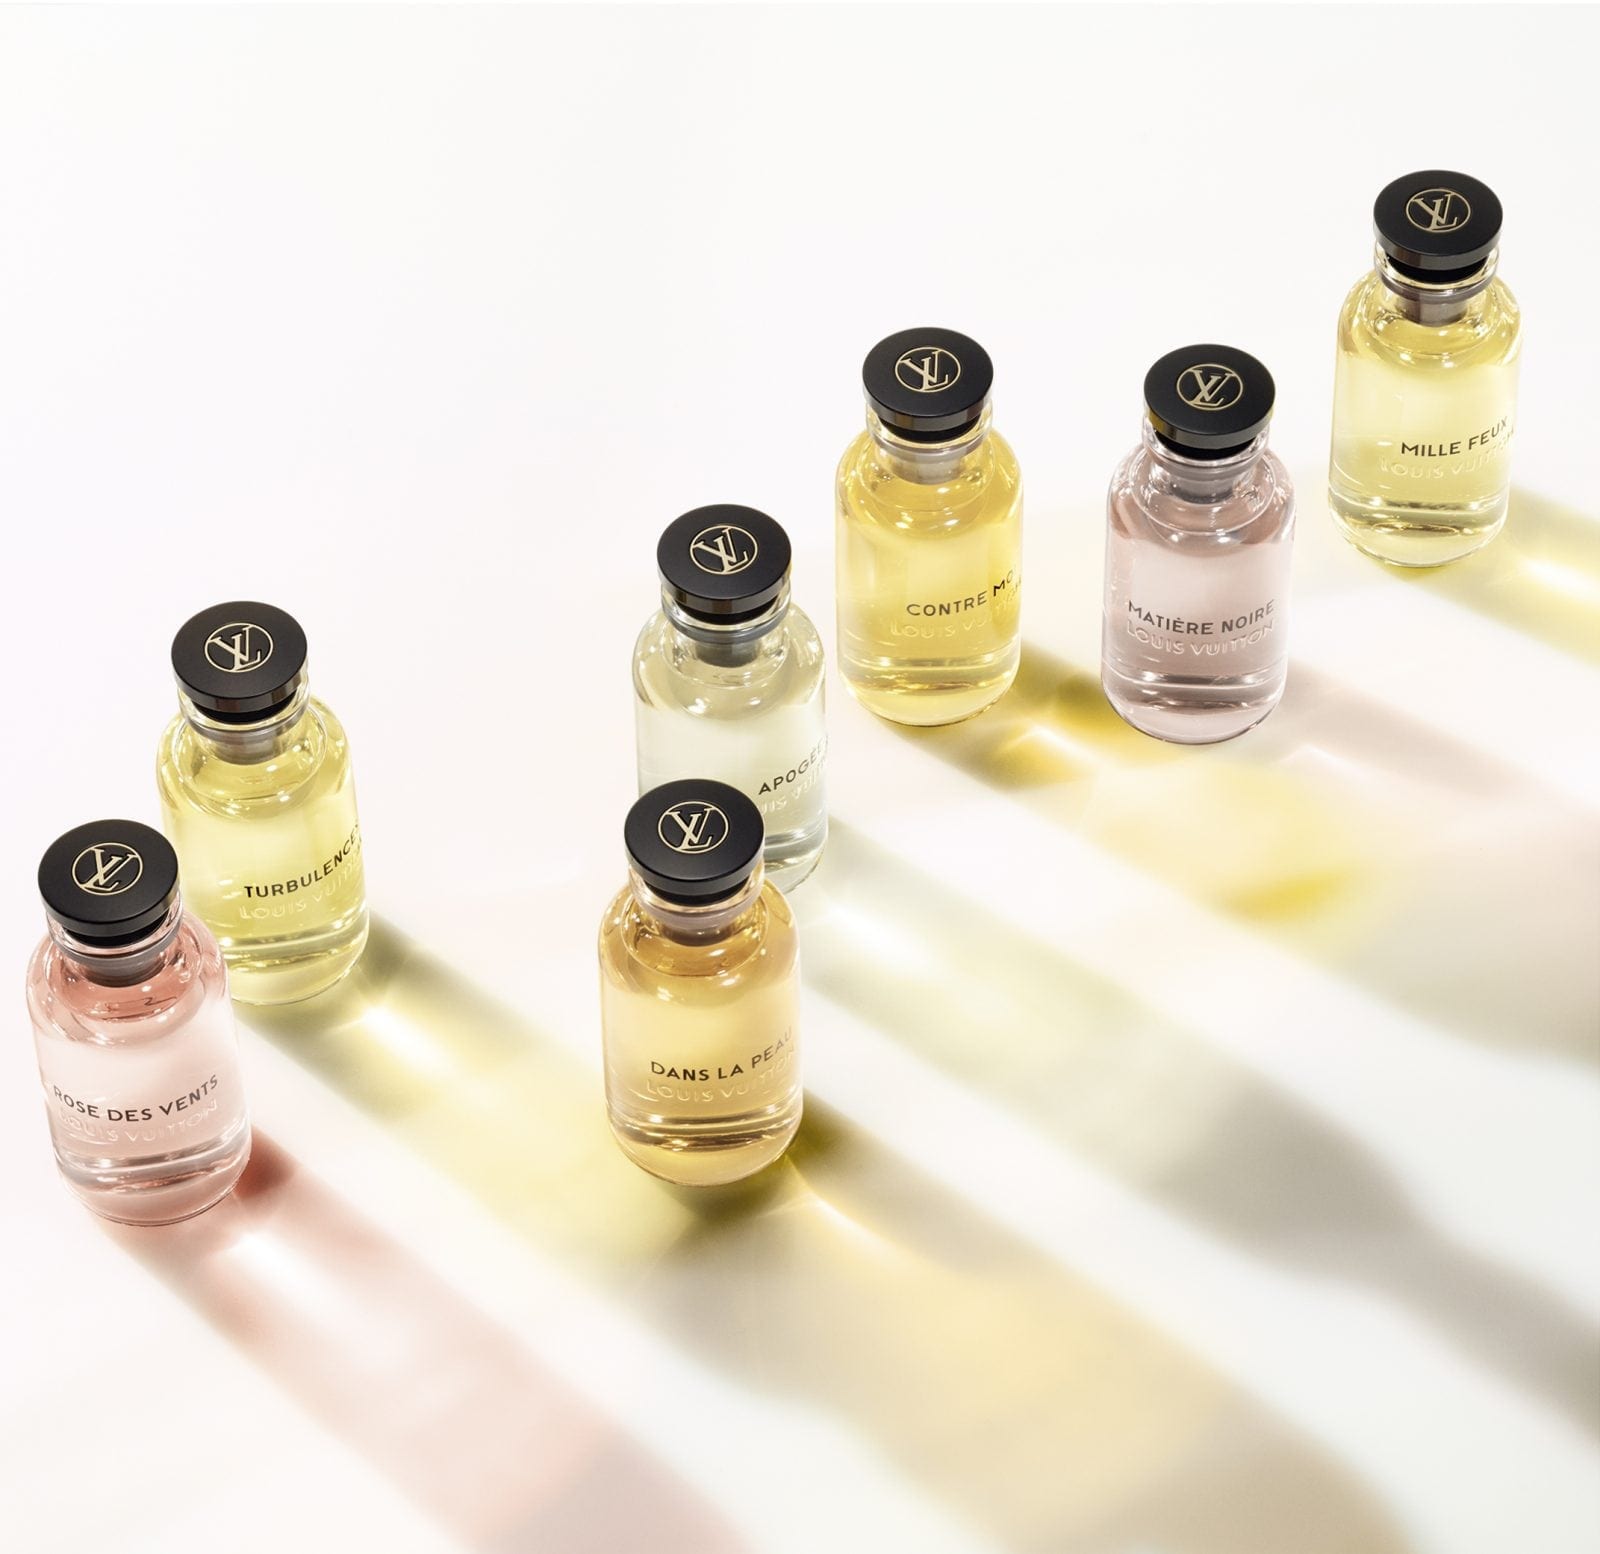 Louis Vuitton Attrape Reves Eau De Parfum 2ml/0.06oz Sample Spray